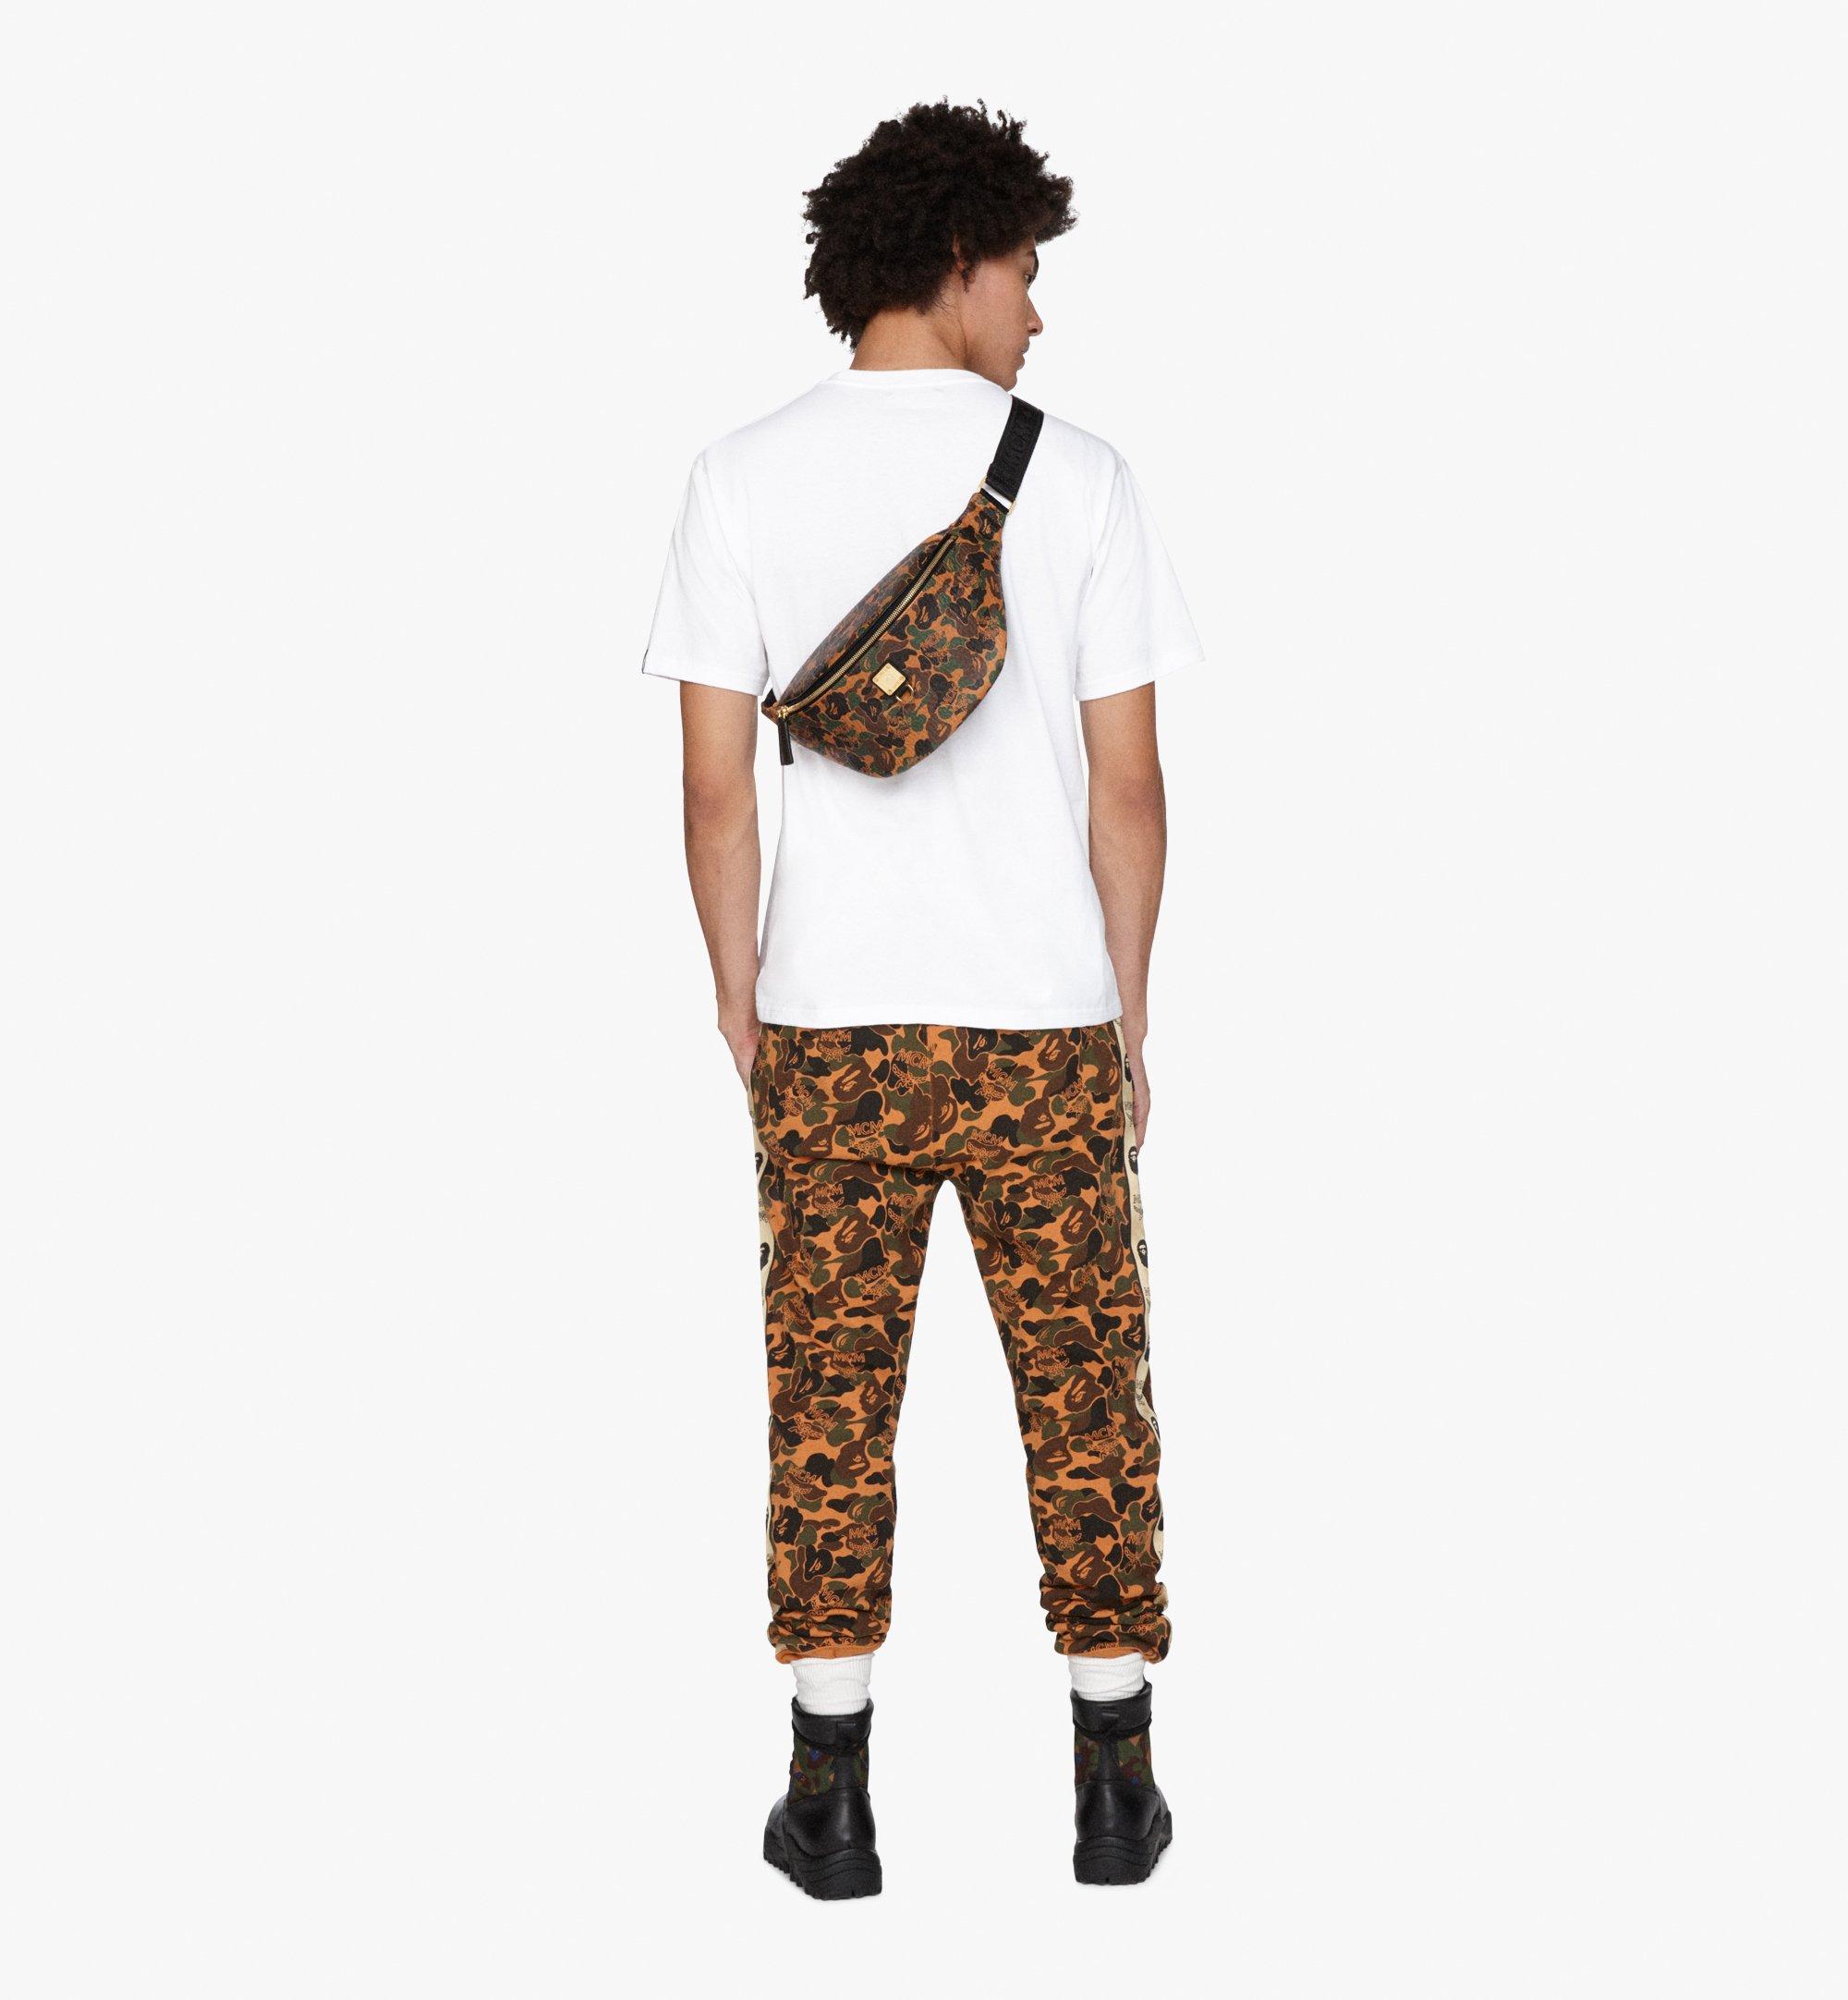 MCM X BAPE Branded belt bag, Men's Bags